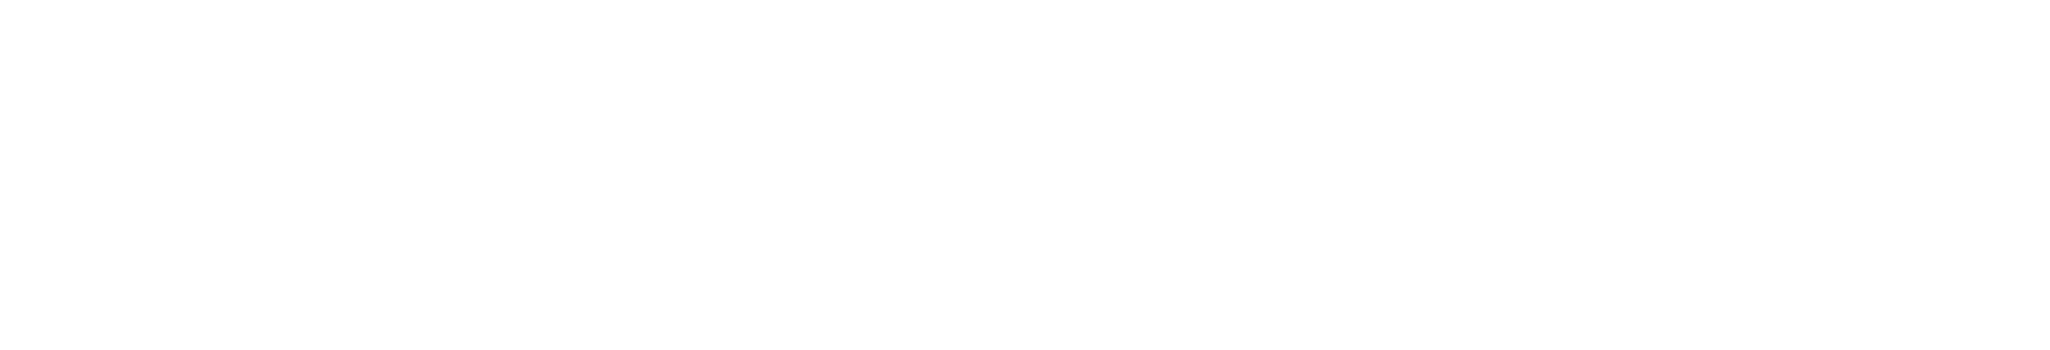 Big I Kentucky logo